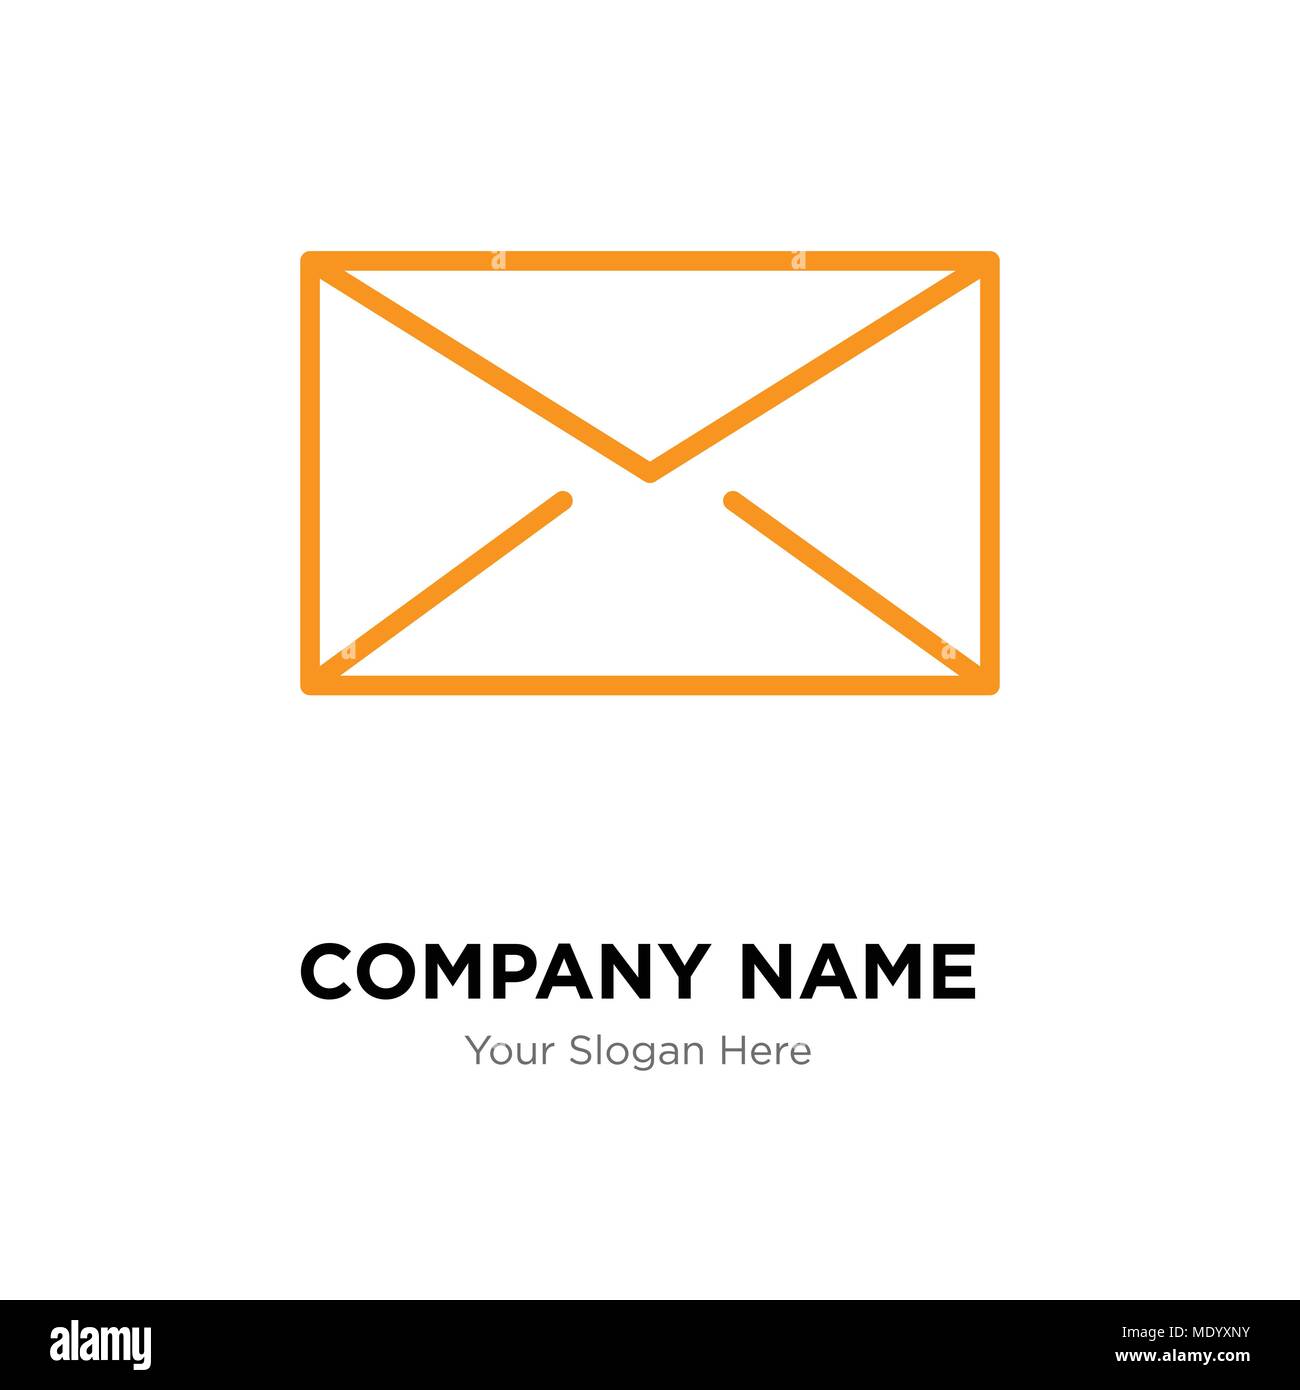 Closed envelope company logo design template, Business corporate vector icon Stock Vector